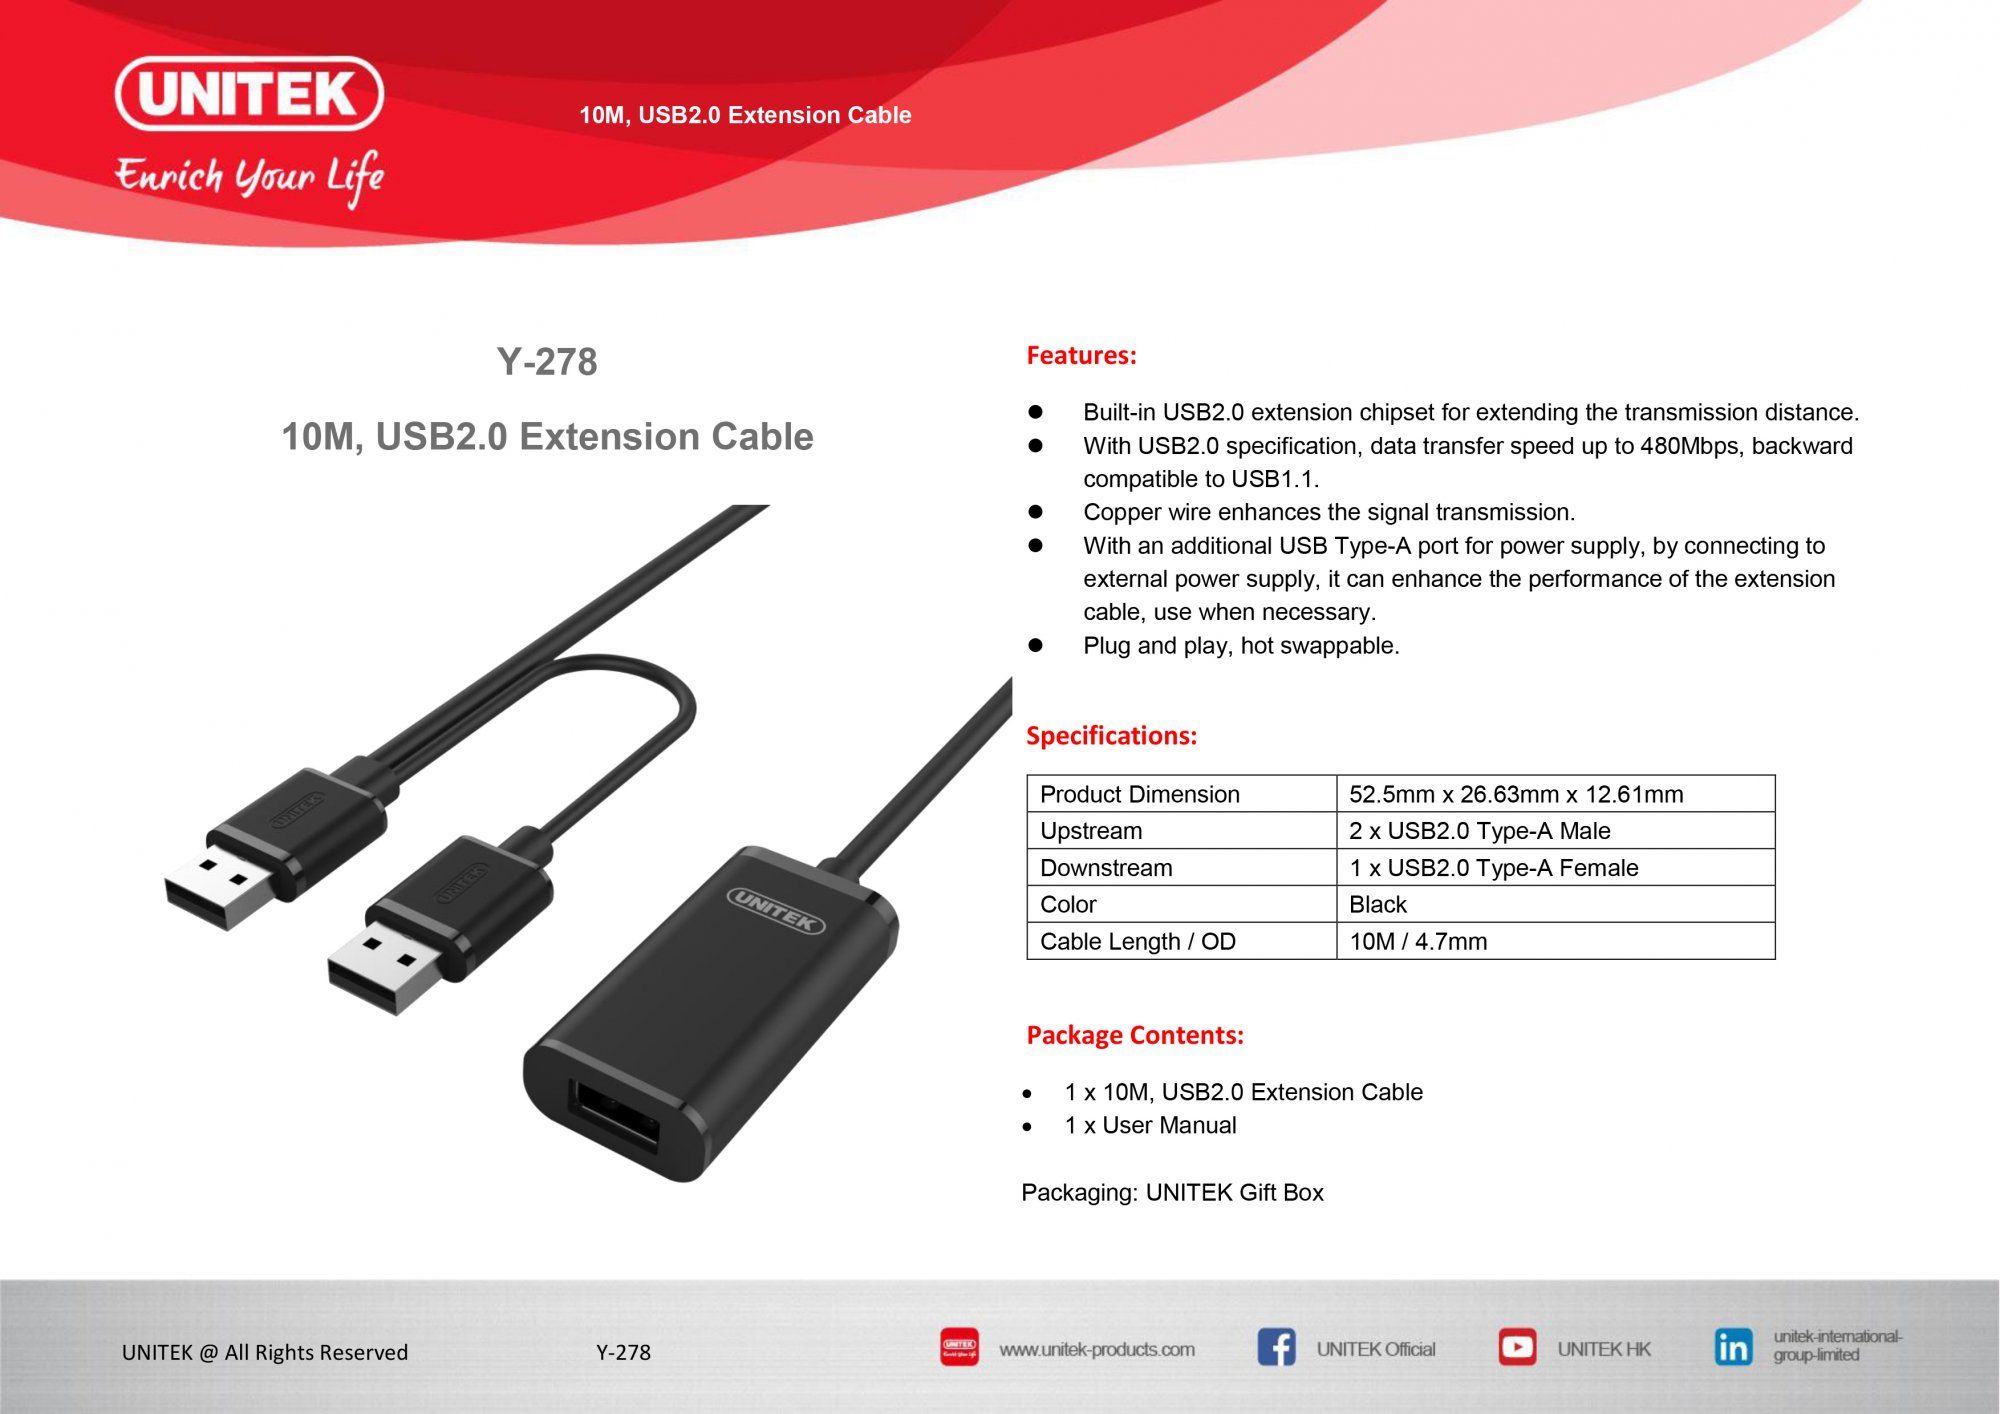 CÁP USB NỐI DÀI 2.0 - 10M EXTENSION UNITEK (Y-278)